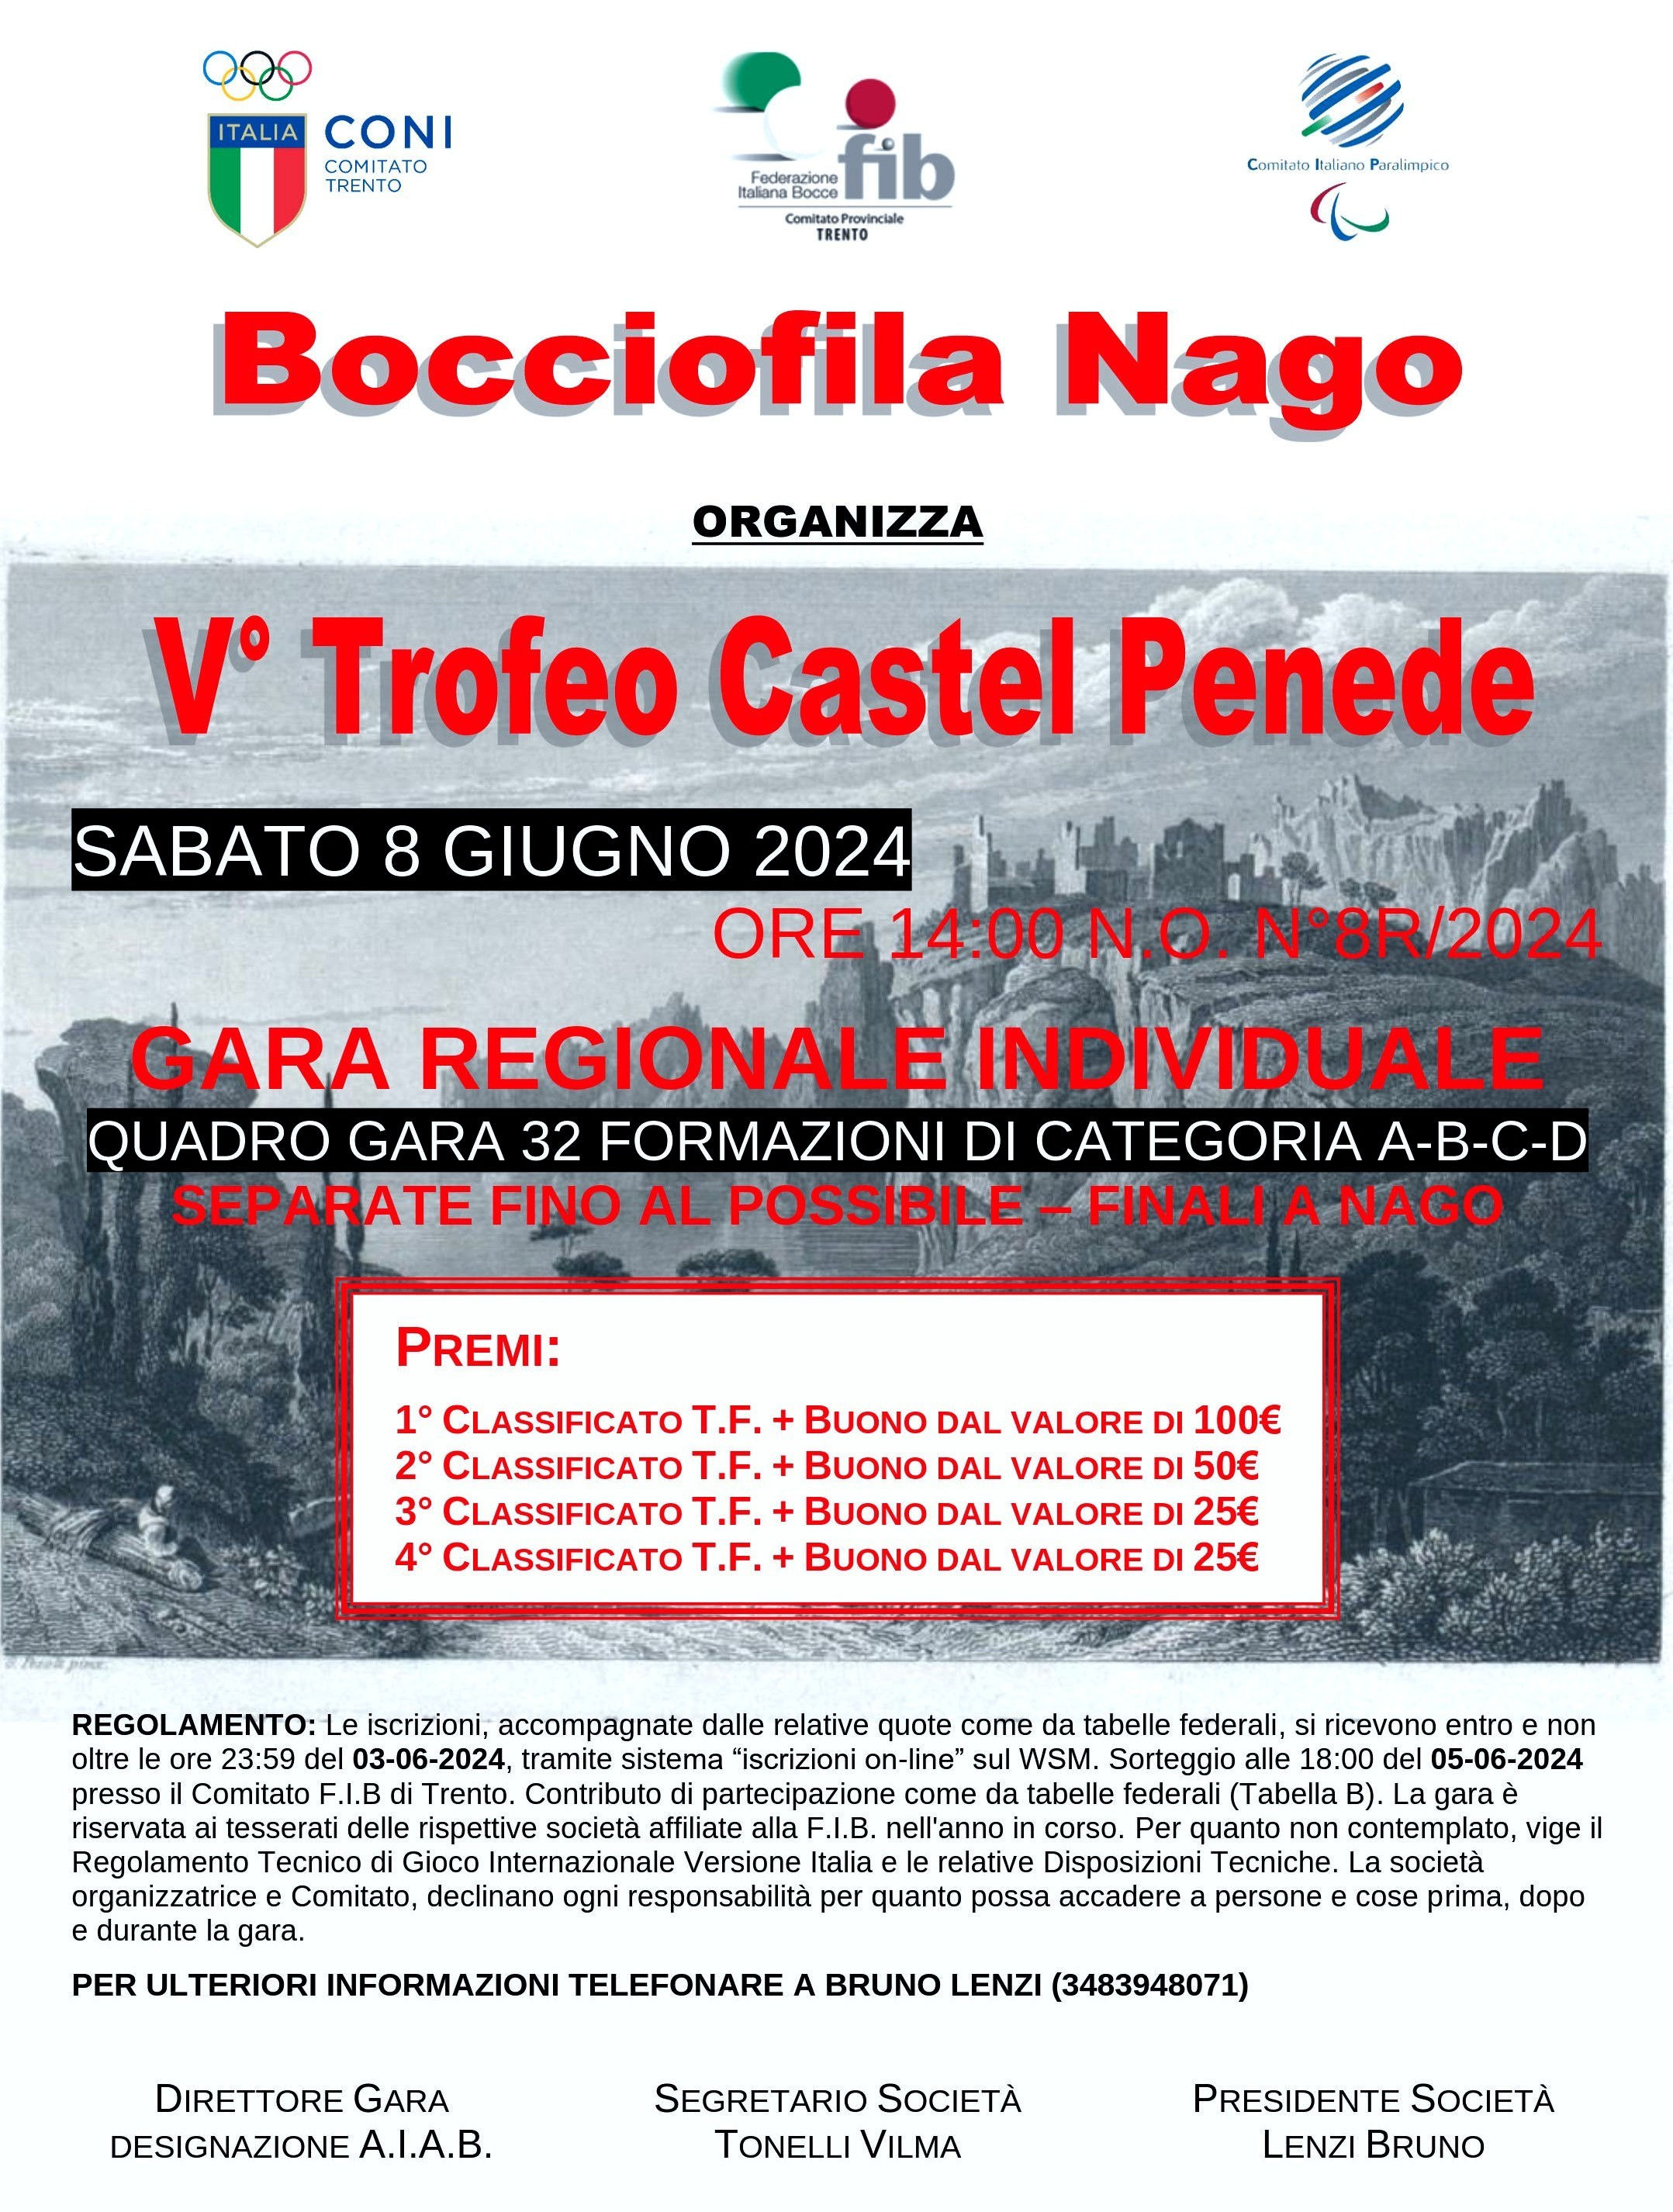 202406 08 5 TROFEO CASTEL PENEDE Bocciofila NAGO MANIFESTO